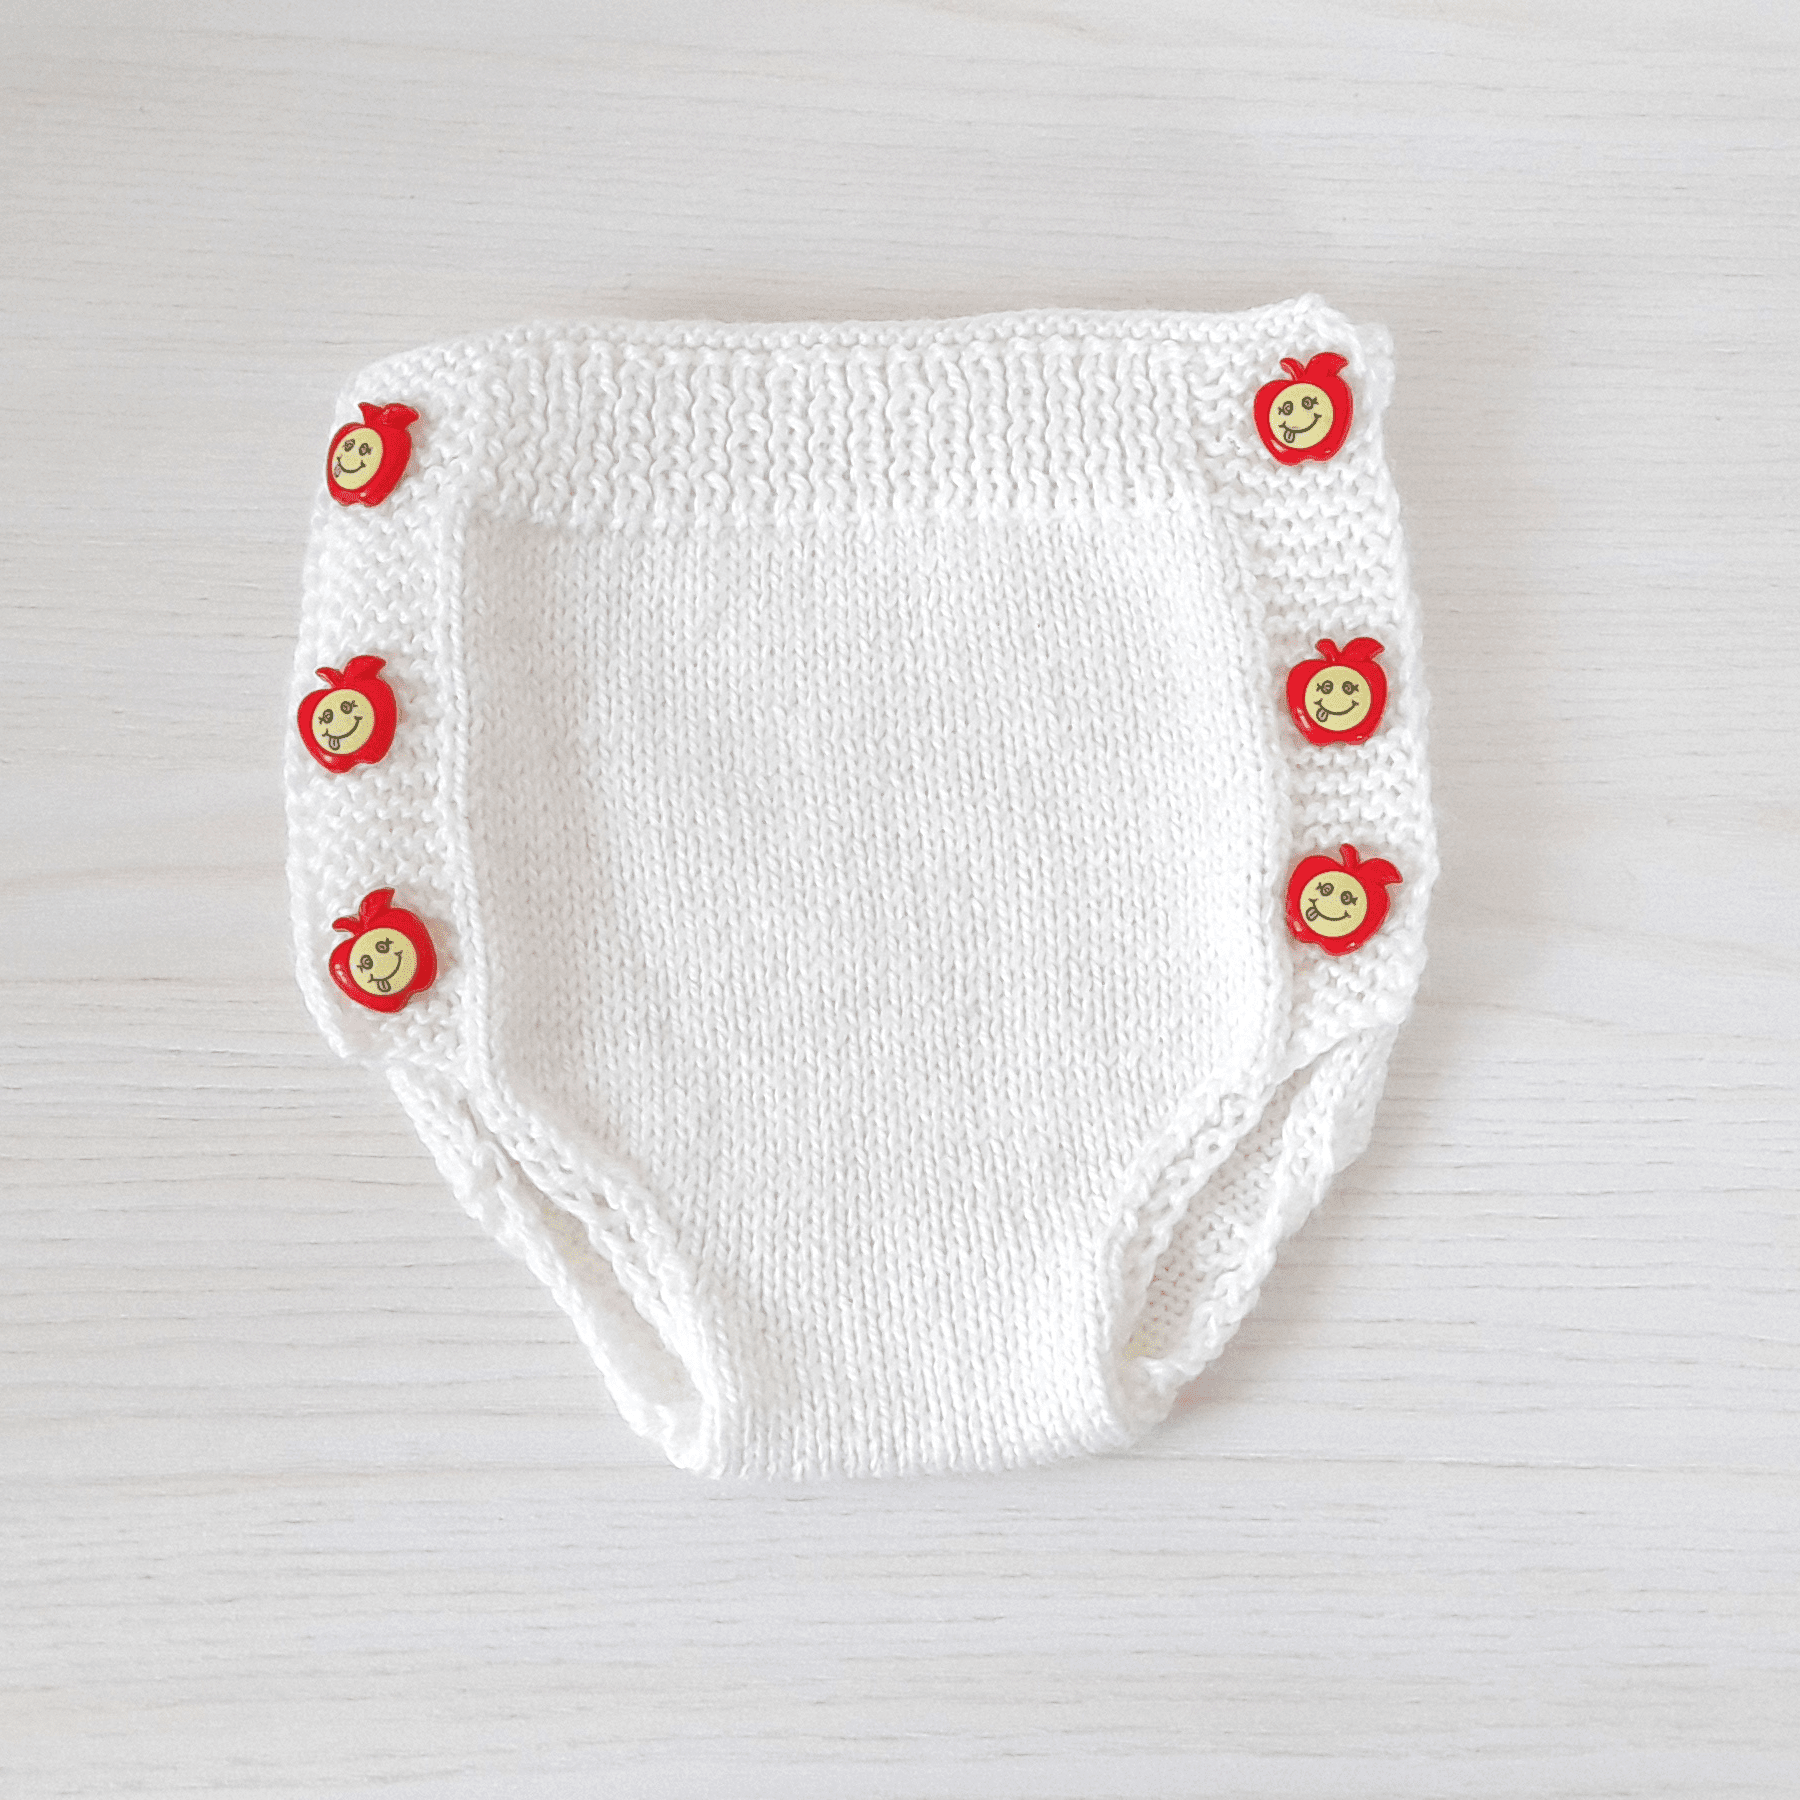 Baby Diaper Cover Knitting Pattern Pdf – 3 Sizes – V47